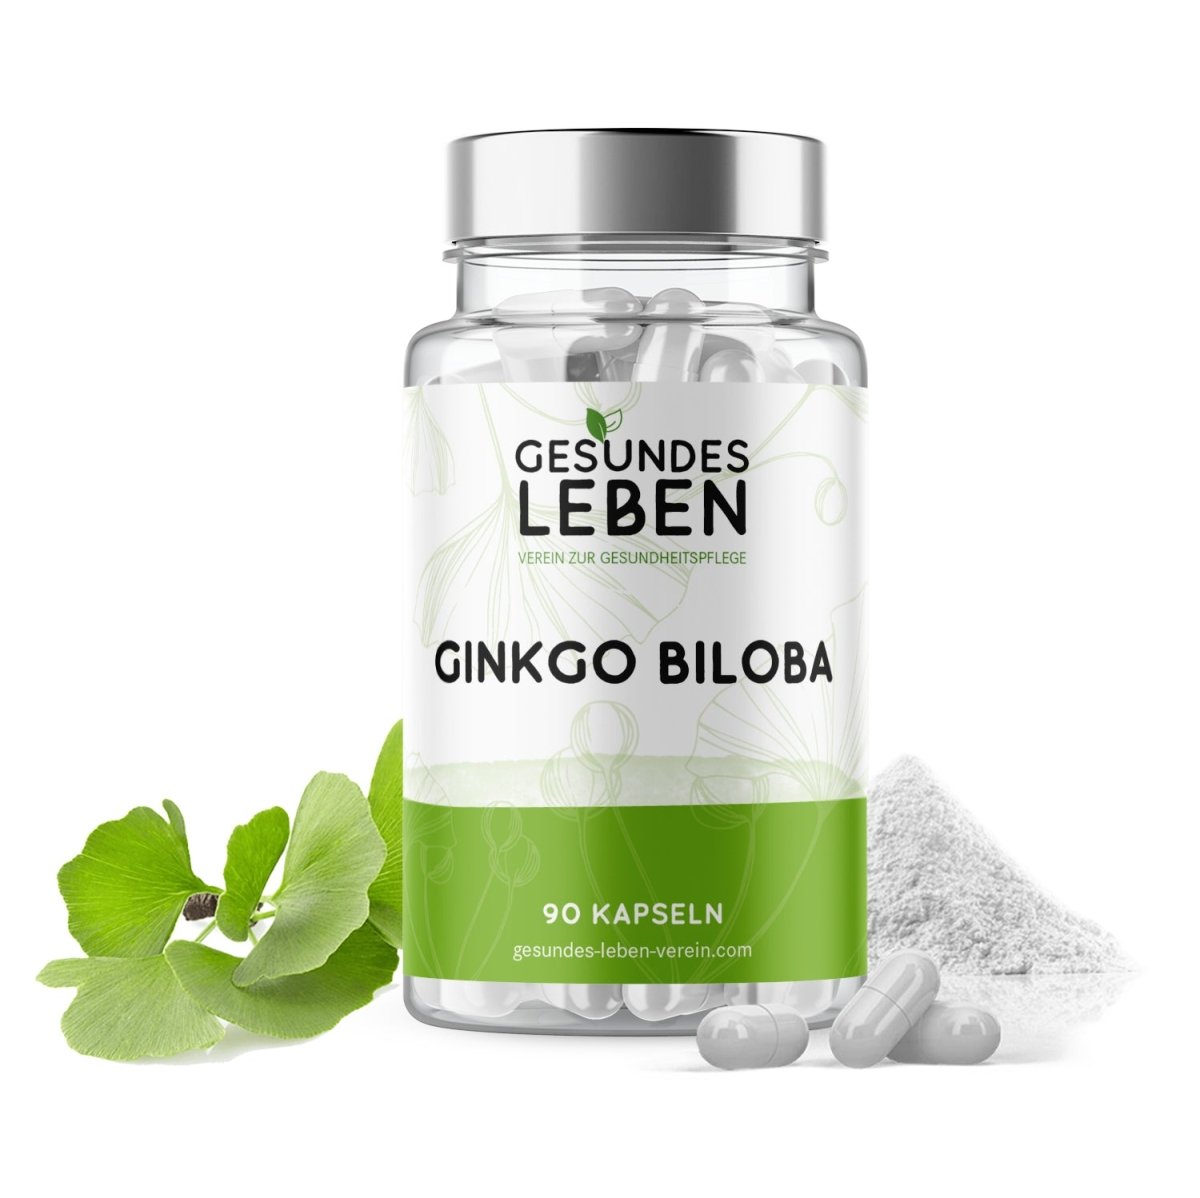 Gesundes Leben - Ginkgo Biloba - 90 Kapseln - HS Activa